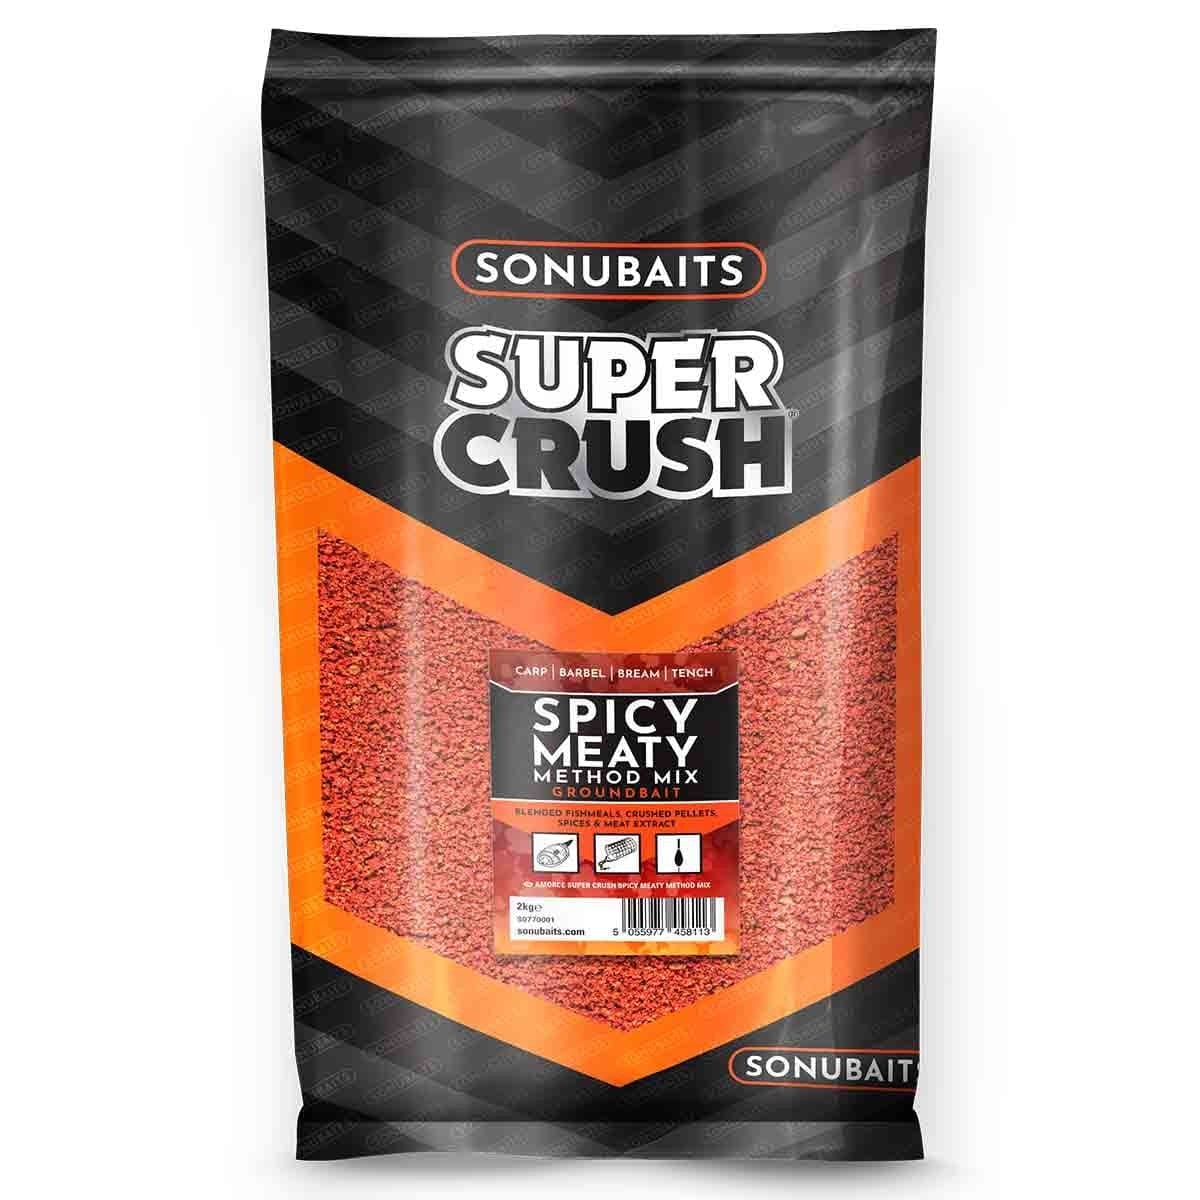 Sonubaits Super Crush Spicy Meaty Method Mix (2kg).